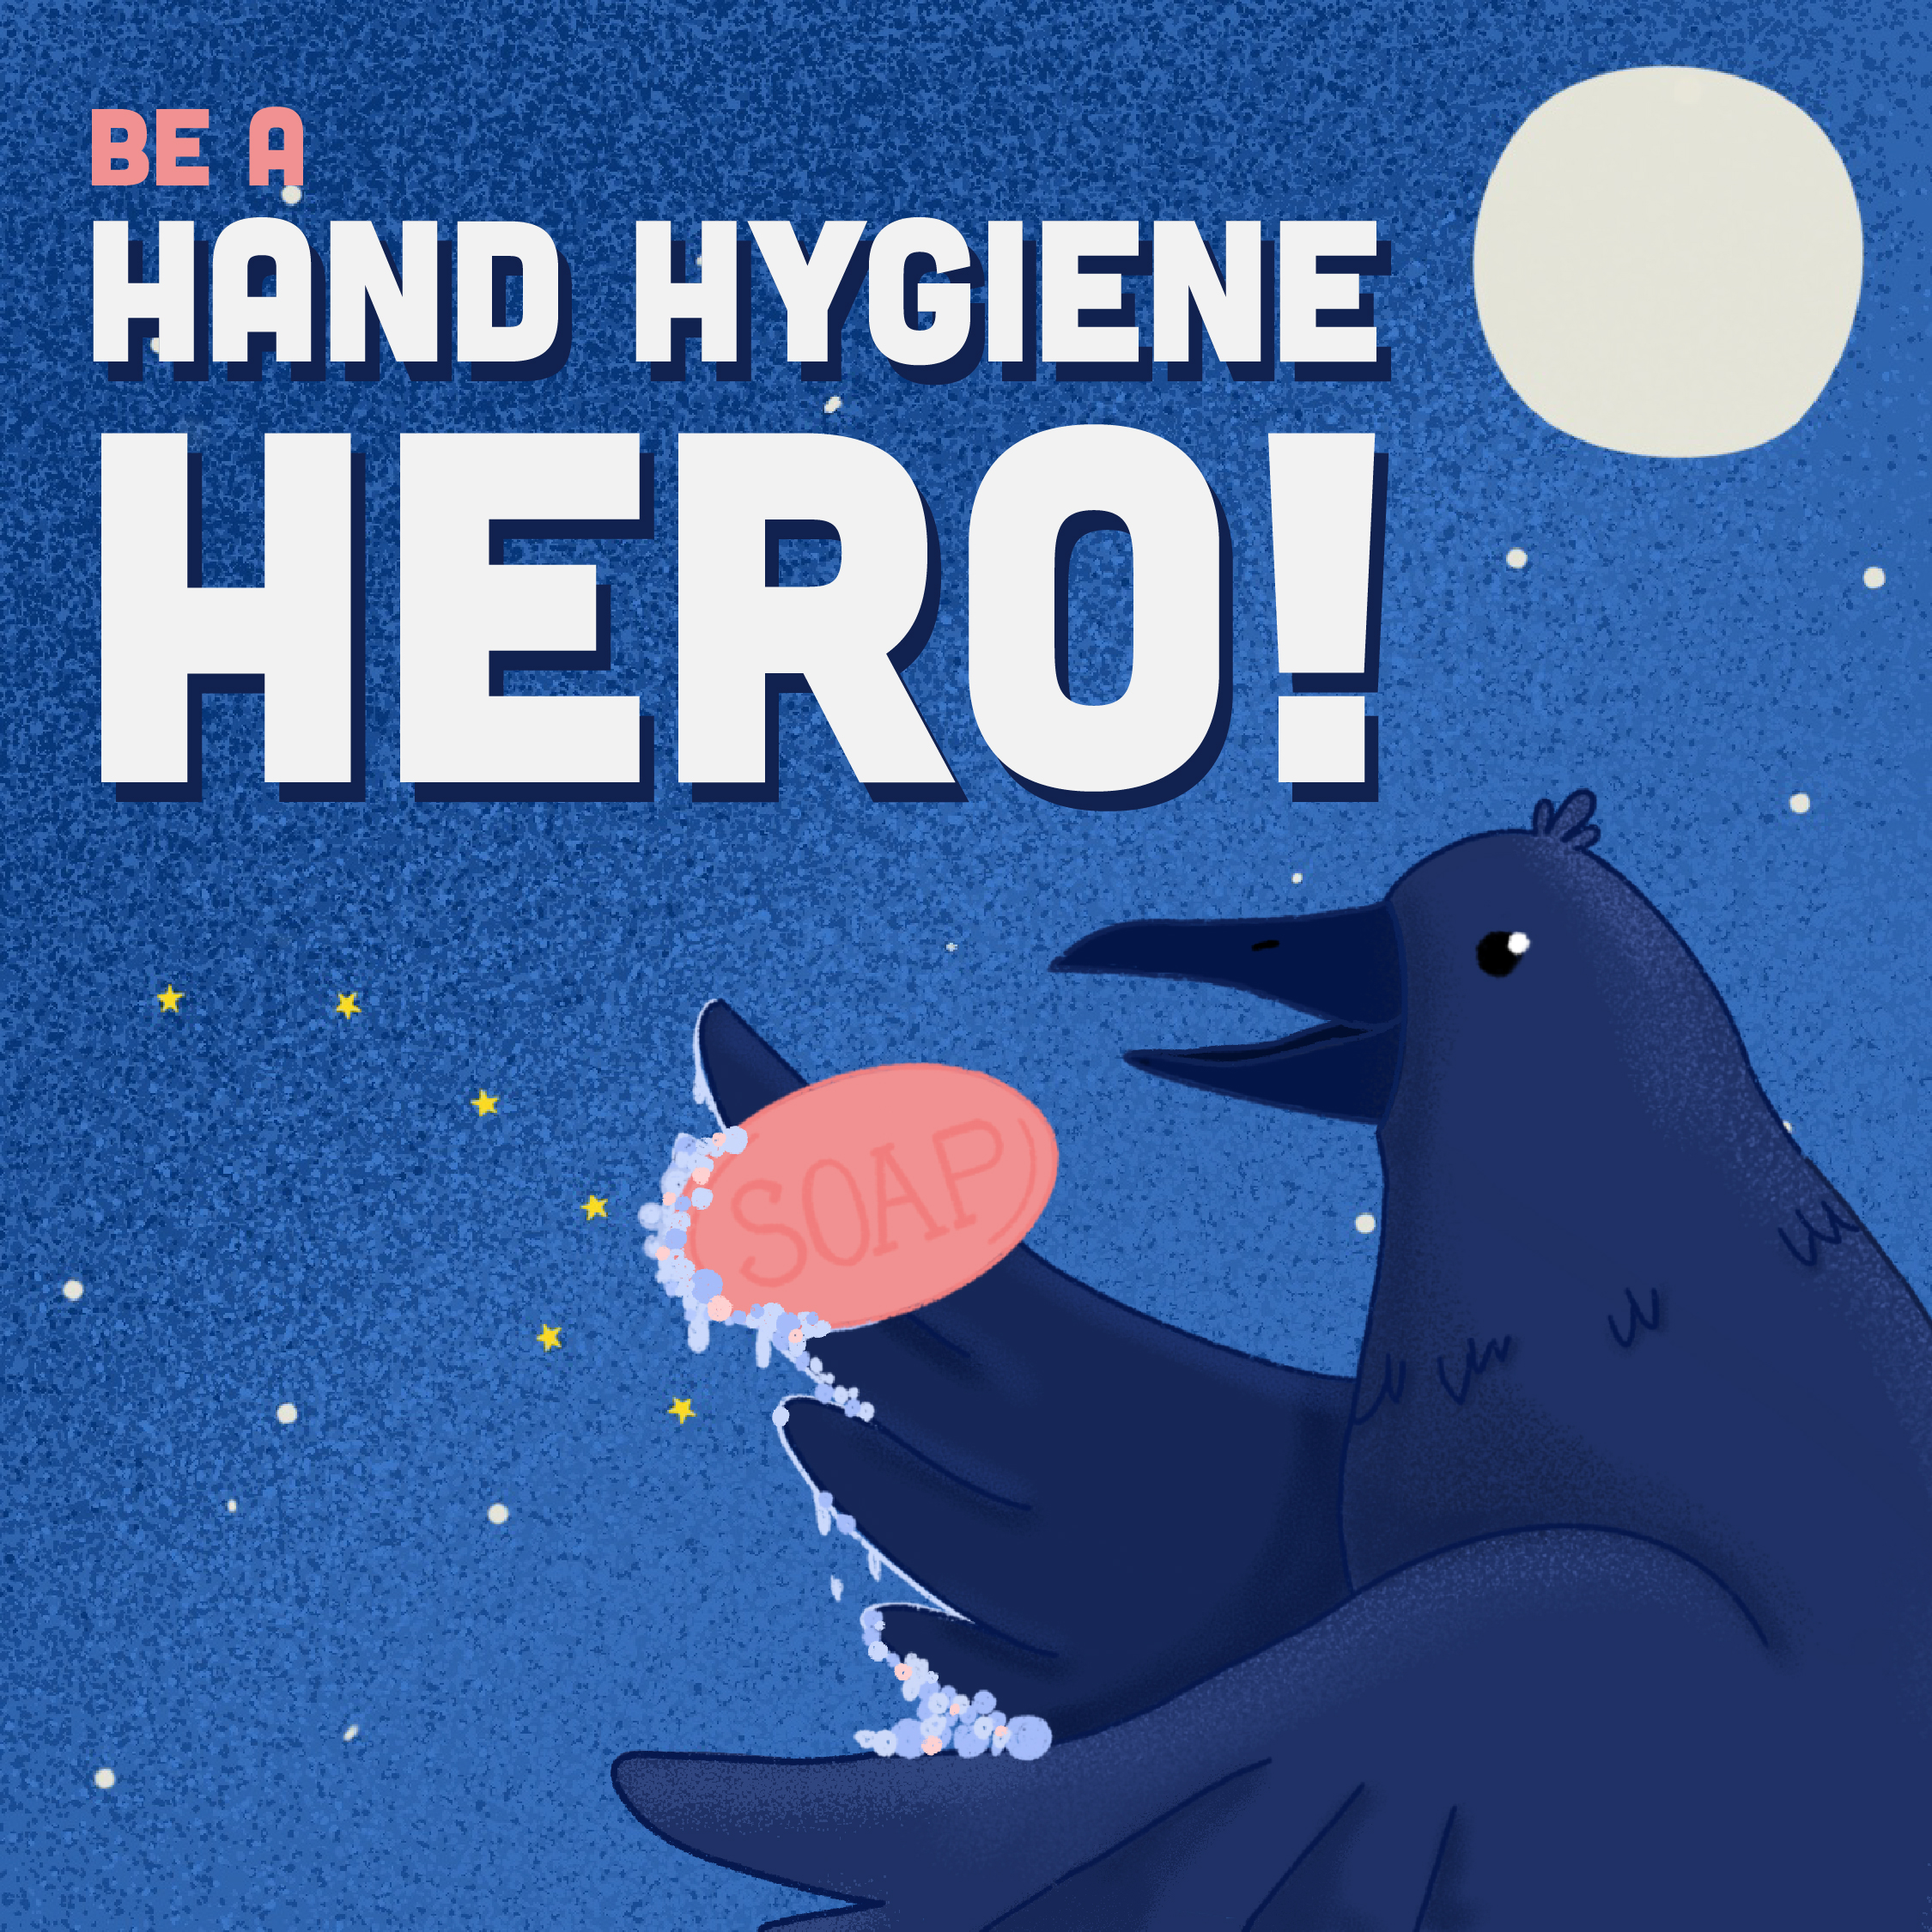 Be a hand hygiene hero!